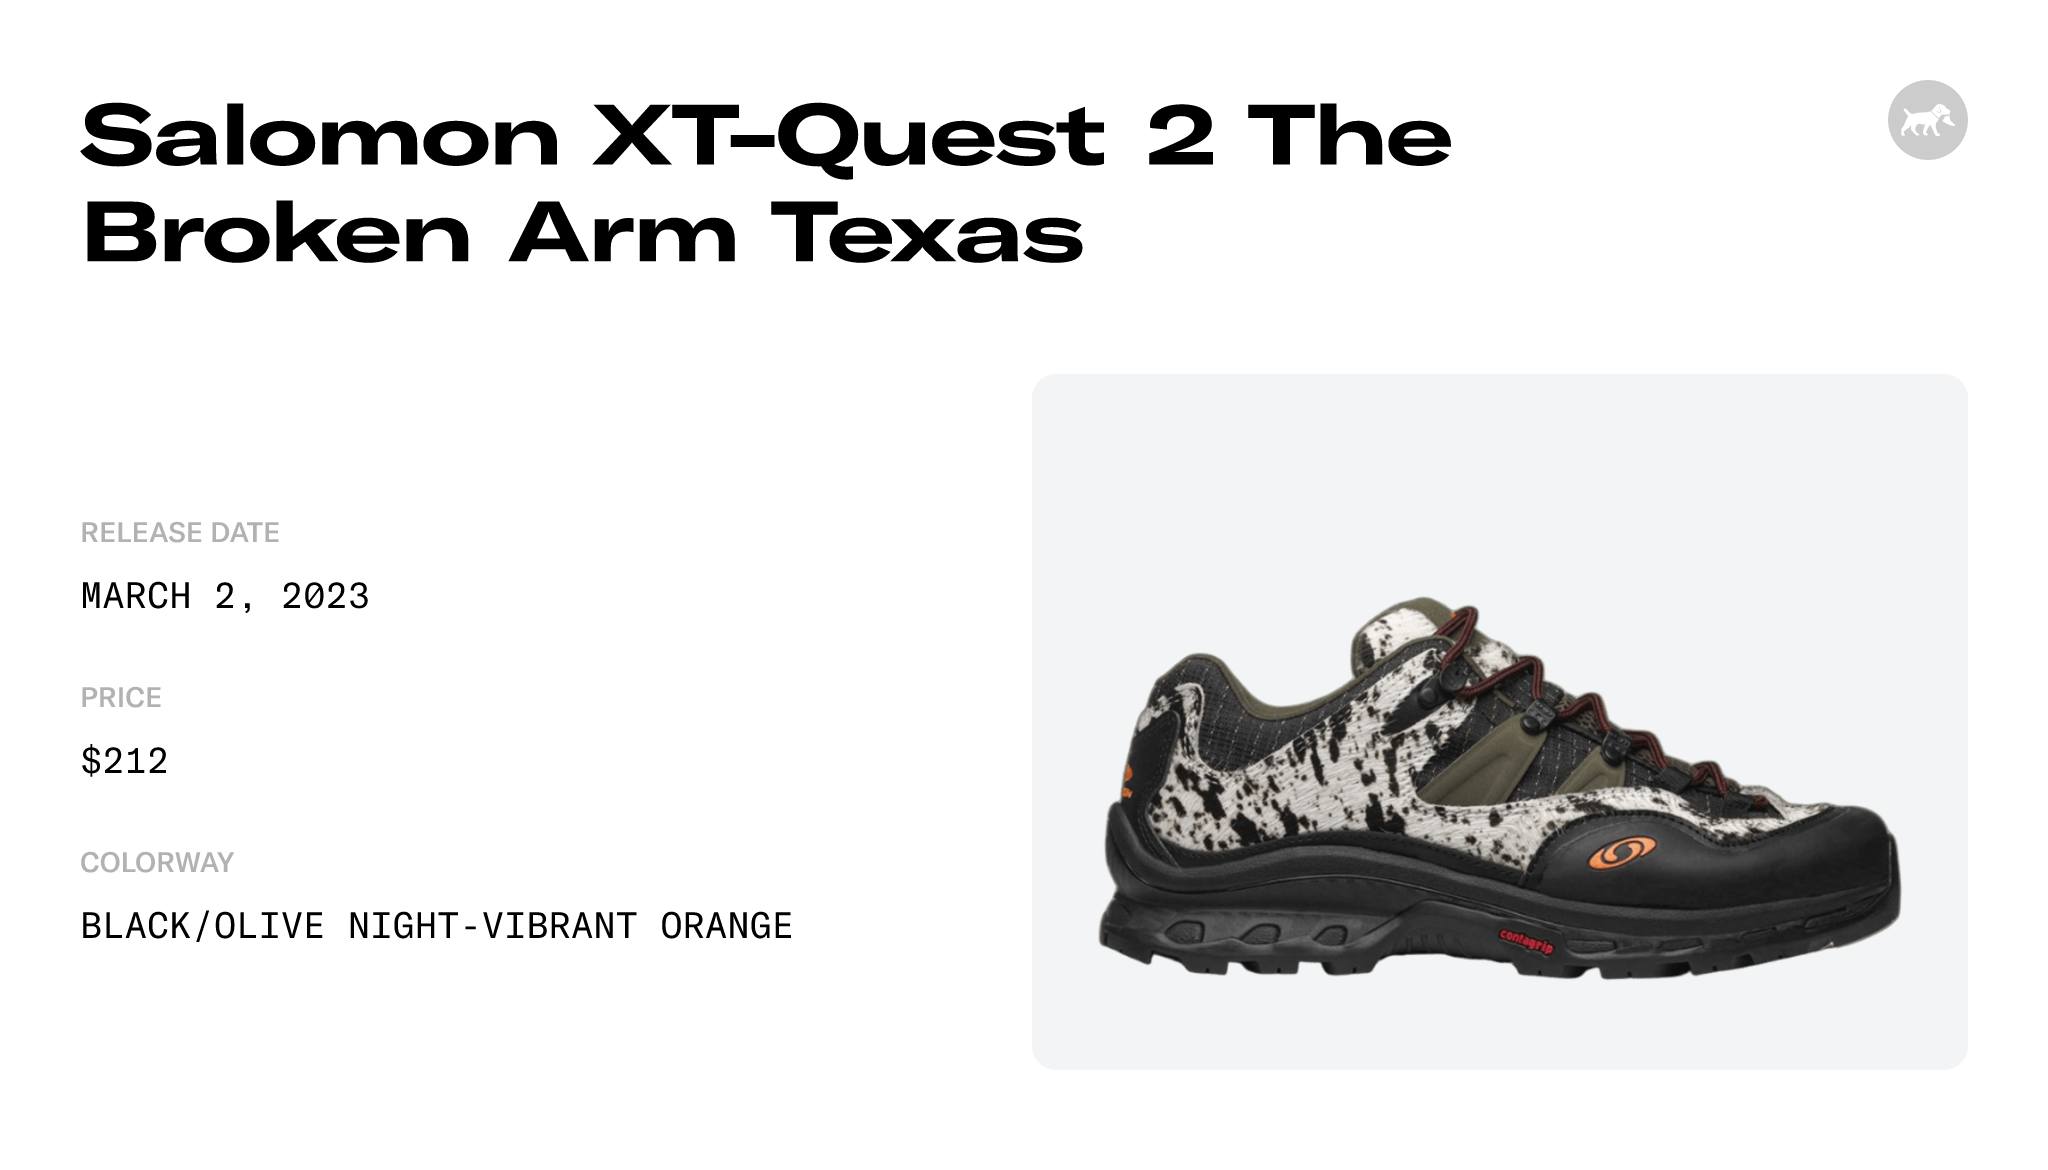 Salomon XT-Quest 2 The Broken Arm Texasfalse Raffles and Release Date